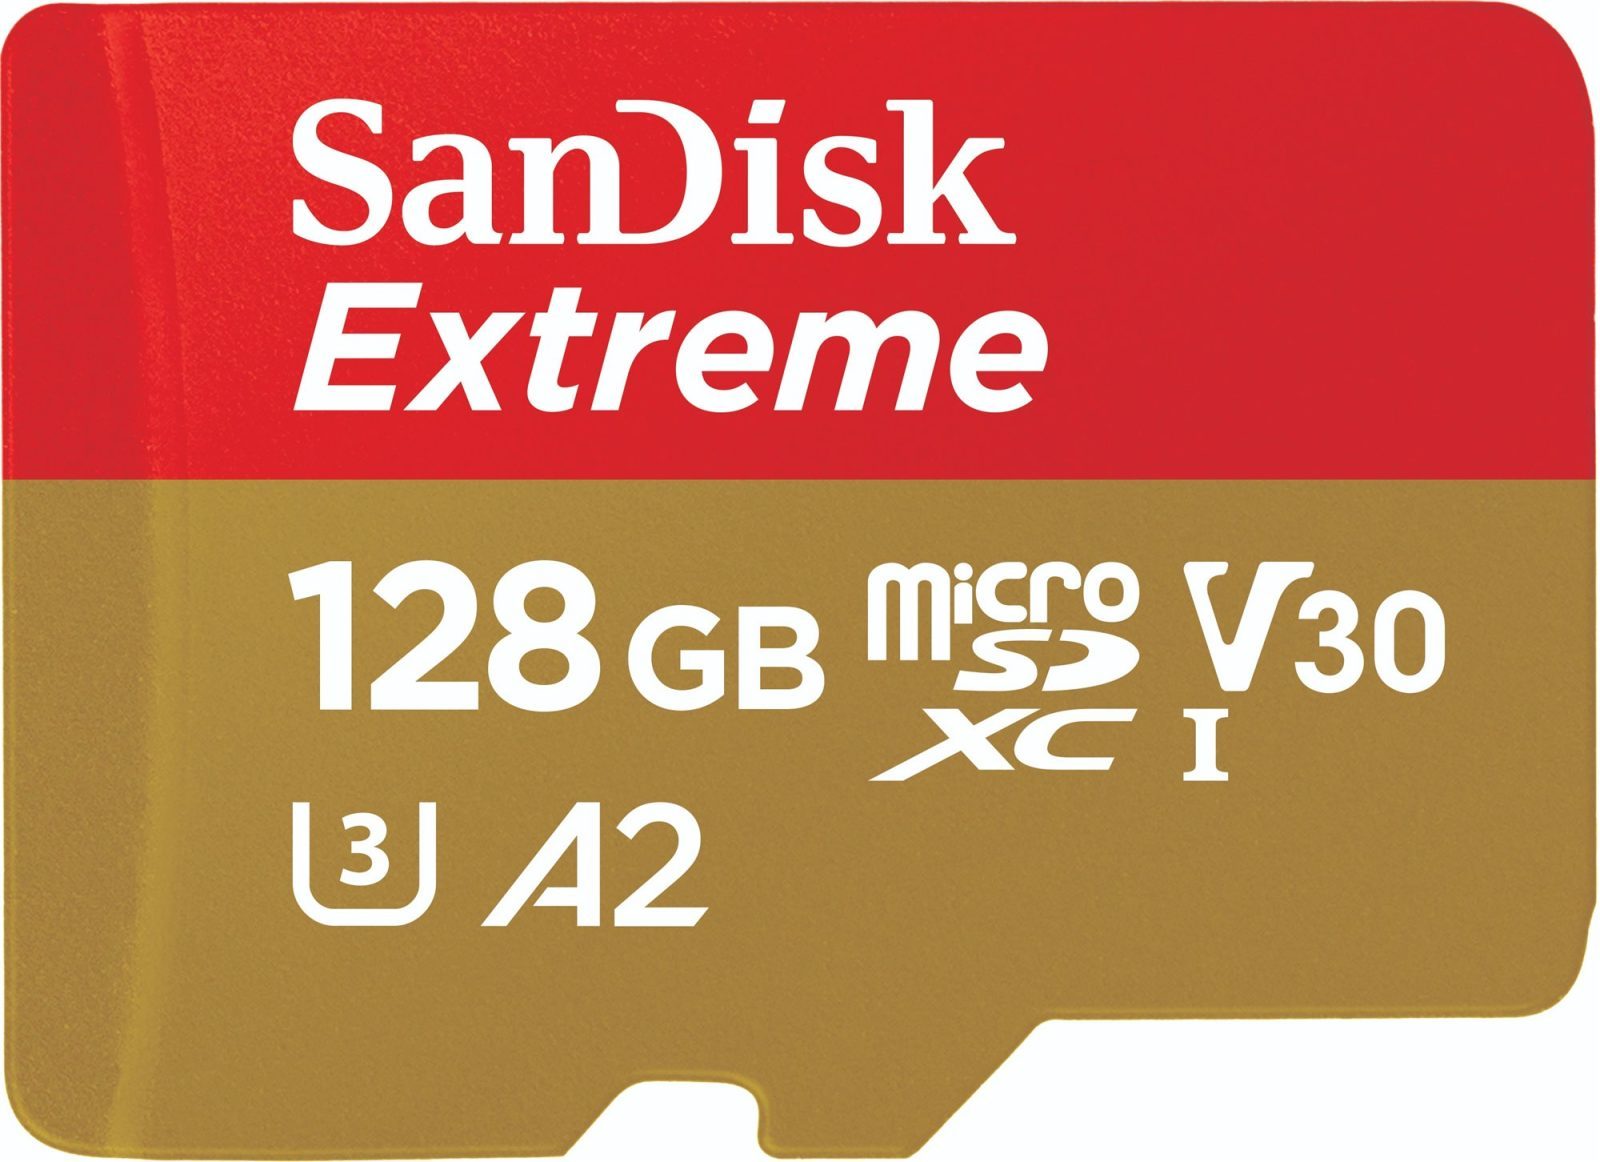 Memóriakártya SanDisk microSDXC 128 GB Extreme Mobile Gaming + Rescue PRO Deluxe